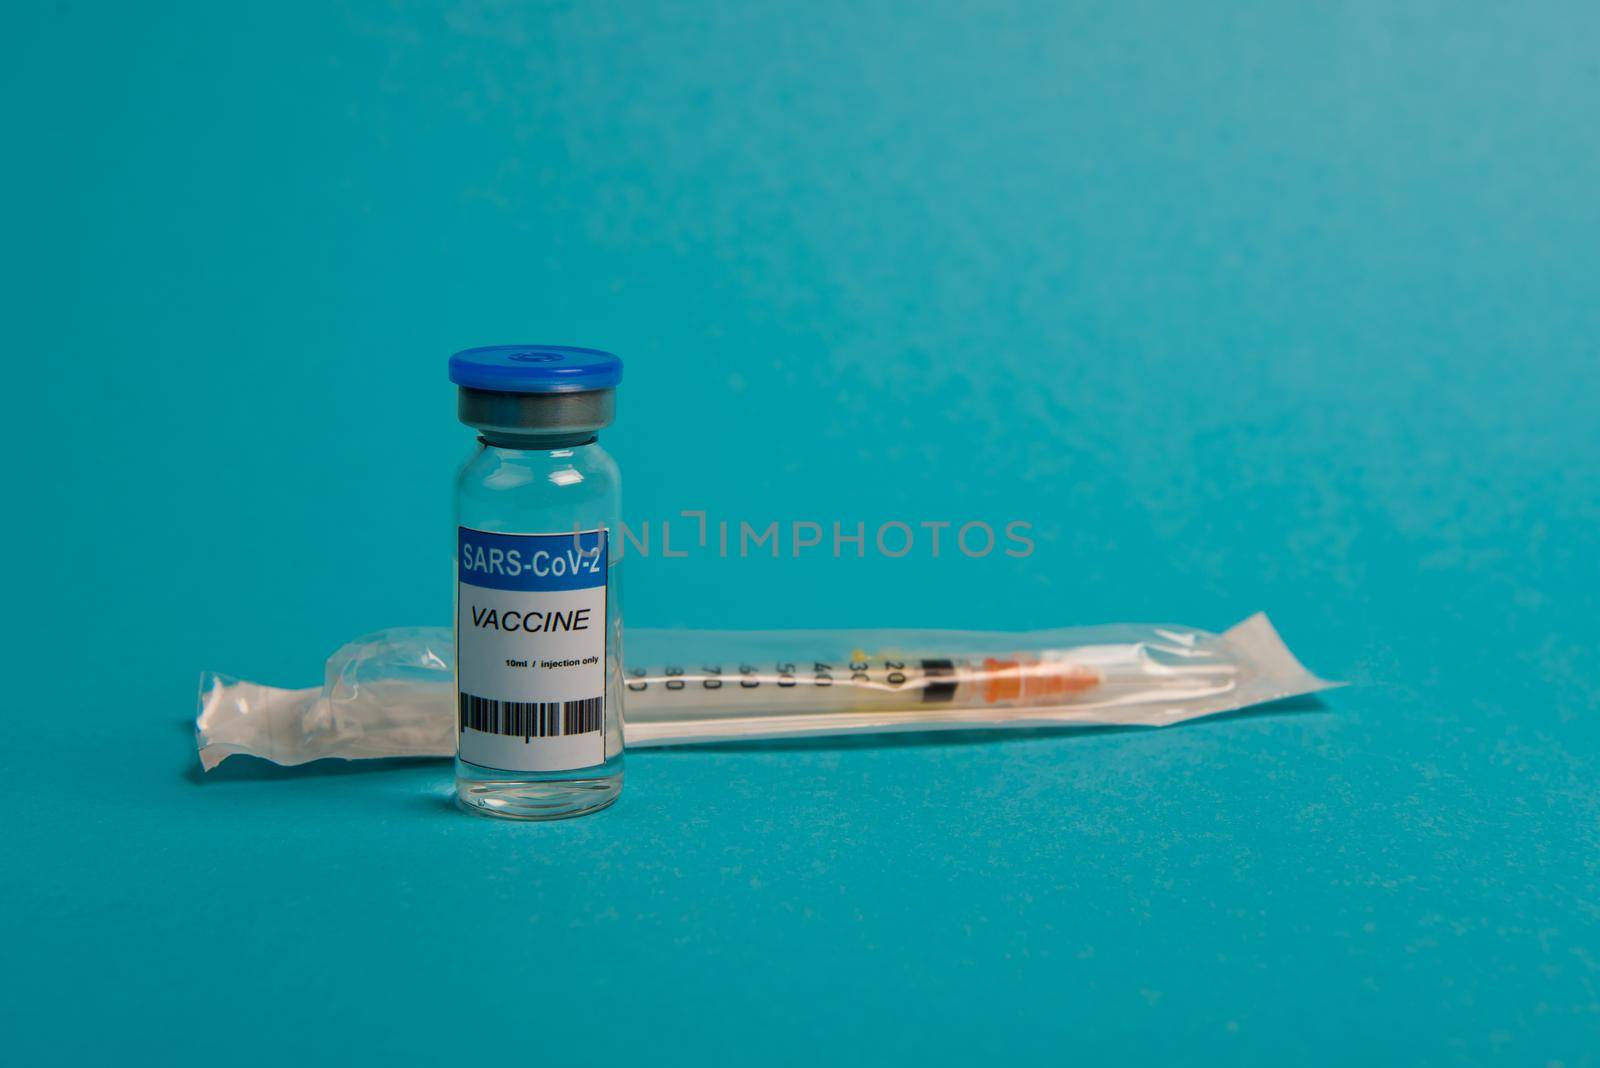 Covid-19 coronavirus vaccine bottle and syringe on blue background. Selective focus.